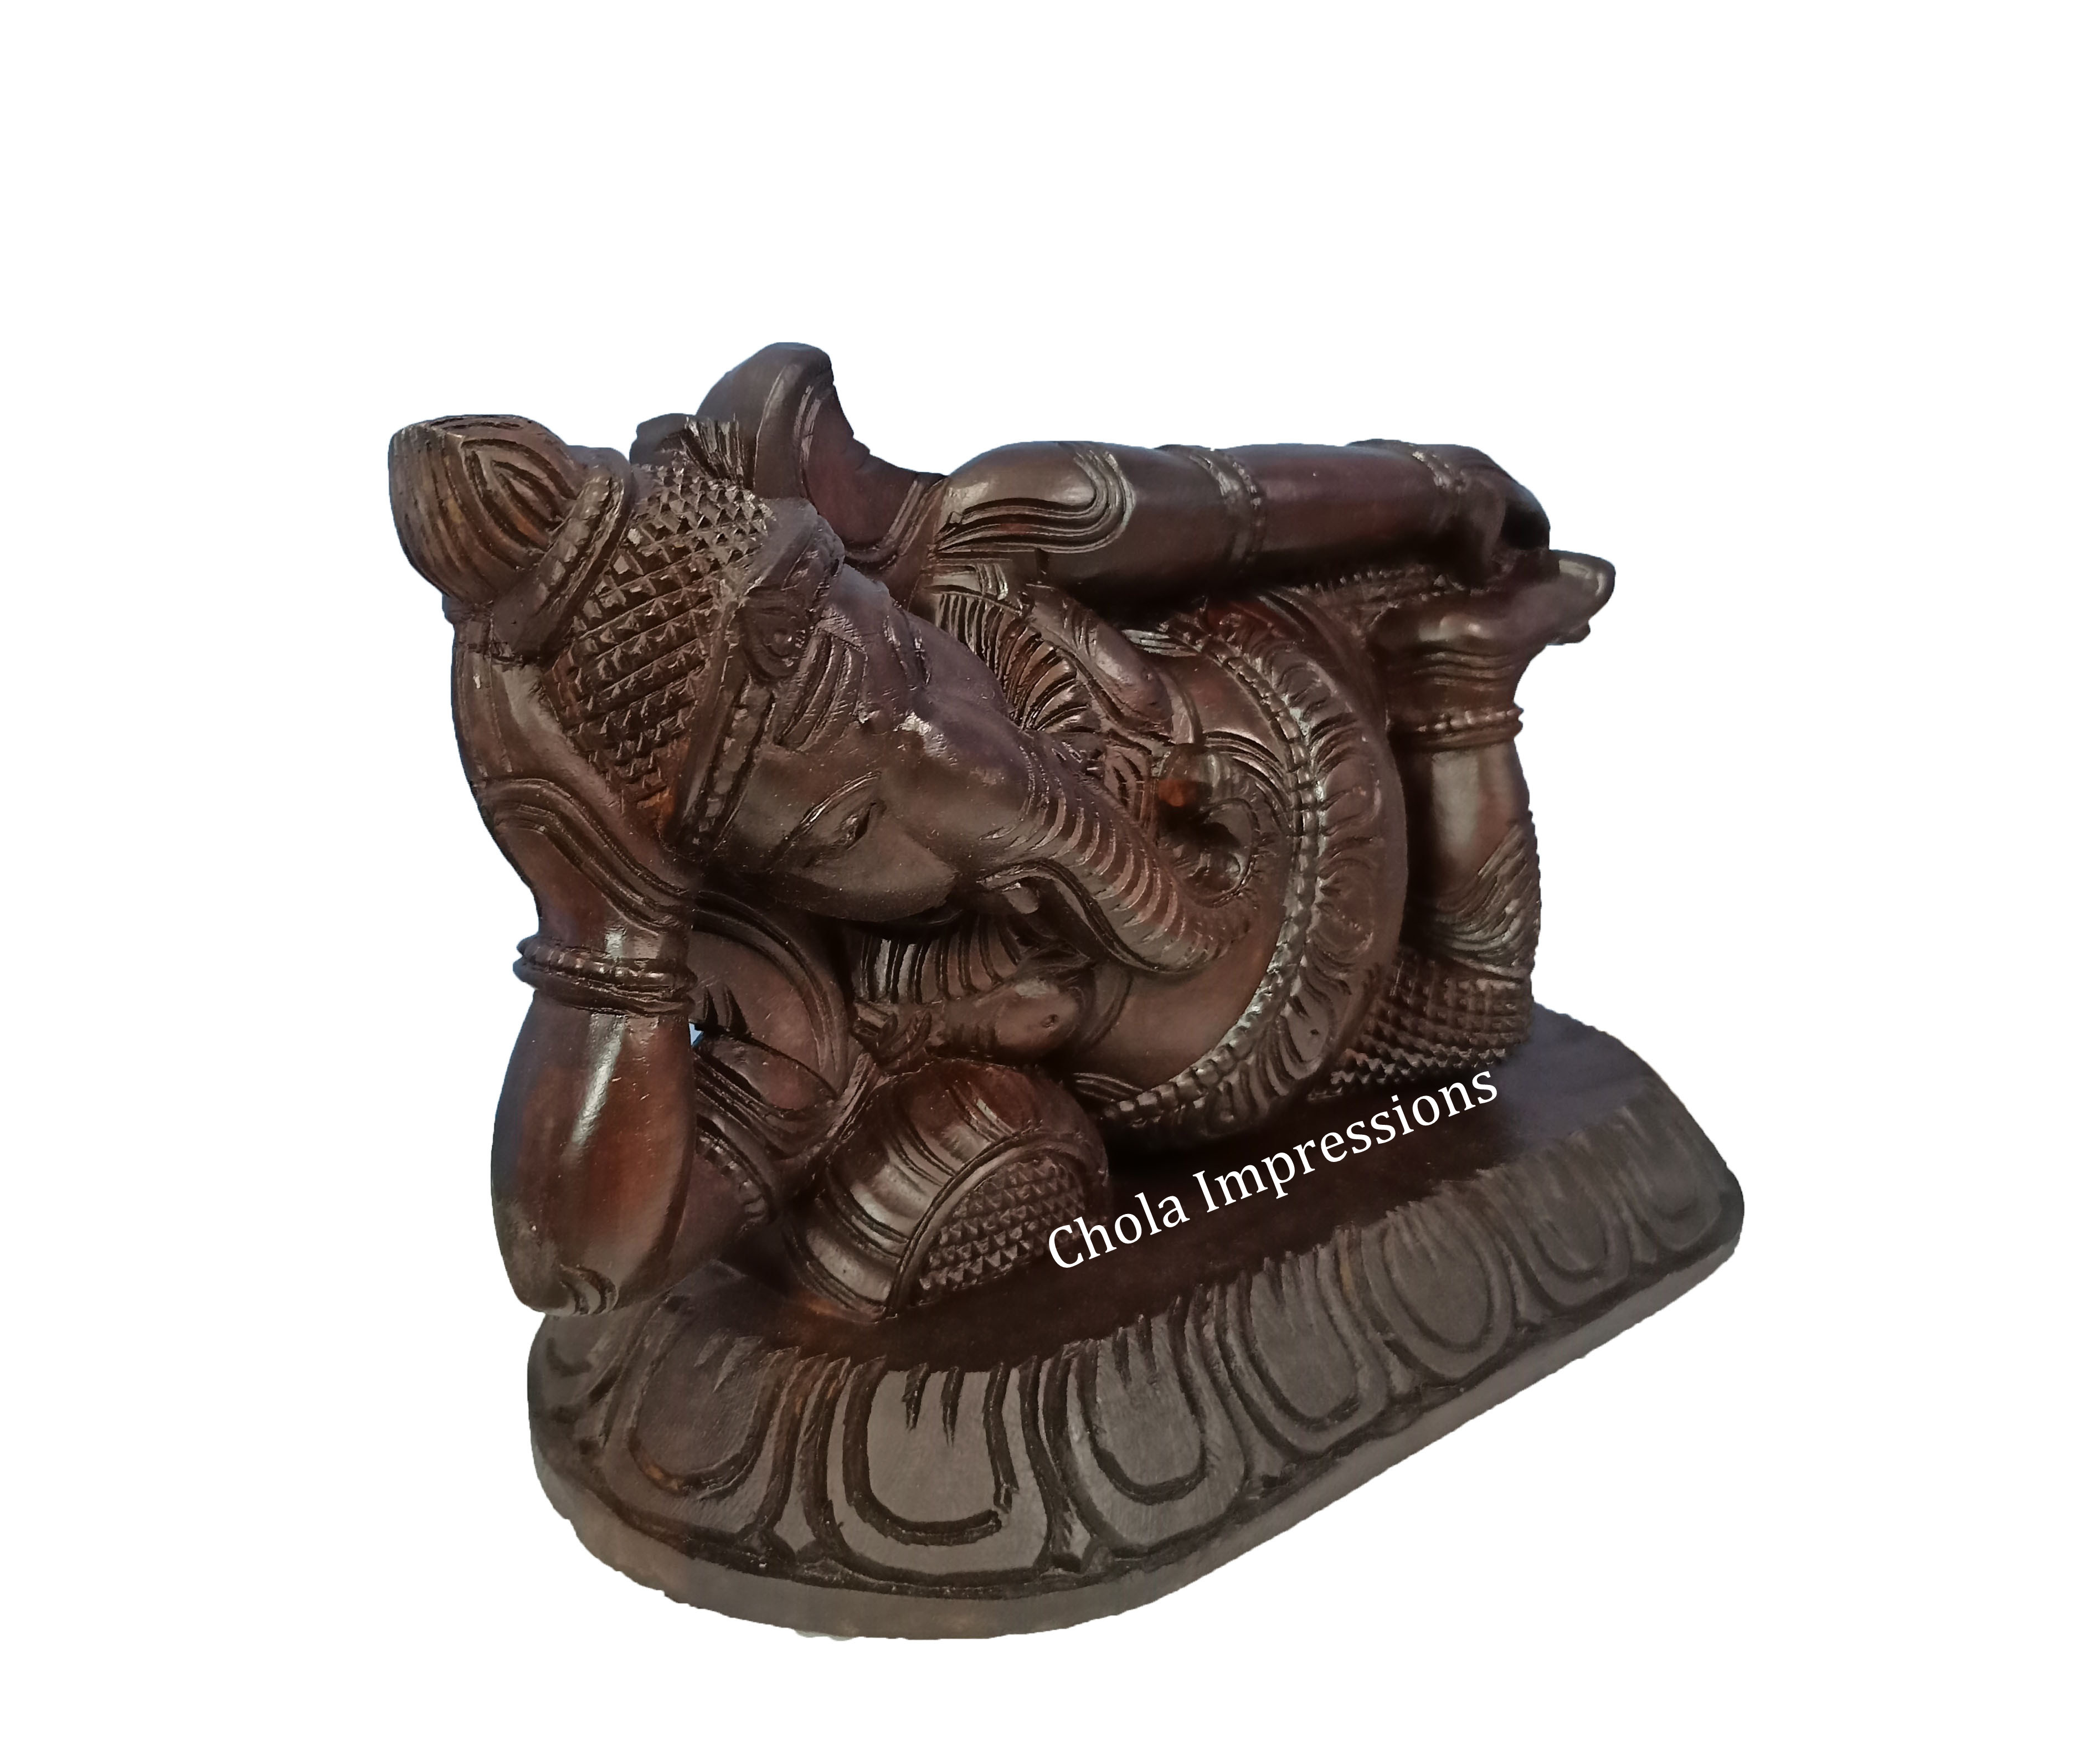 Reclining Vaastu Ganesh (Vaastu Vinayagar) Wooden statue - Antique style